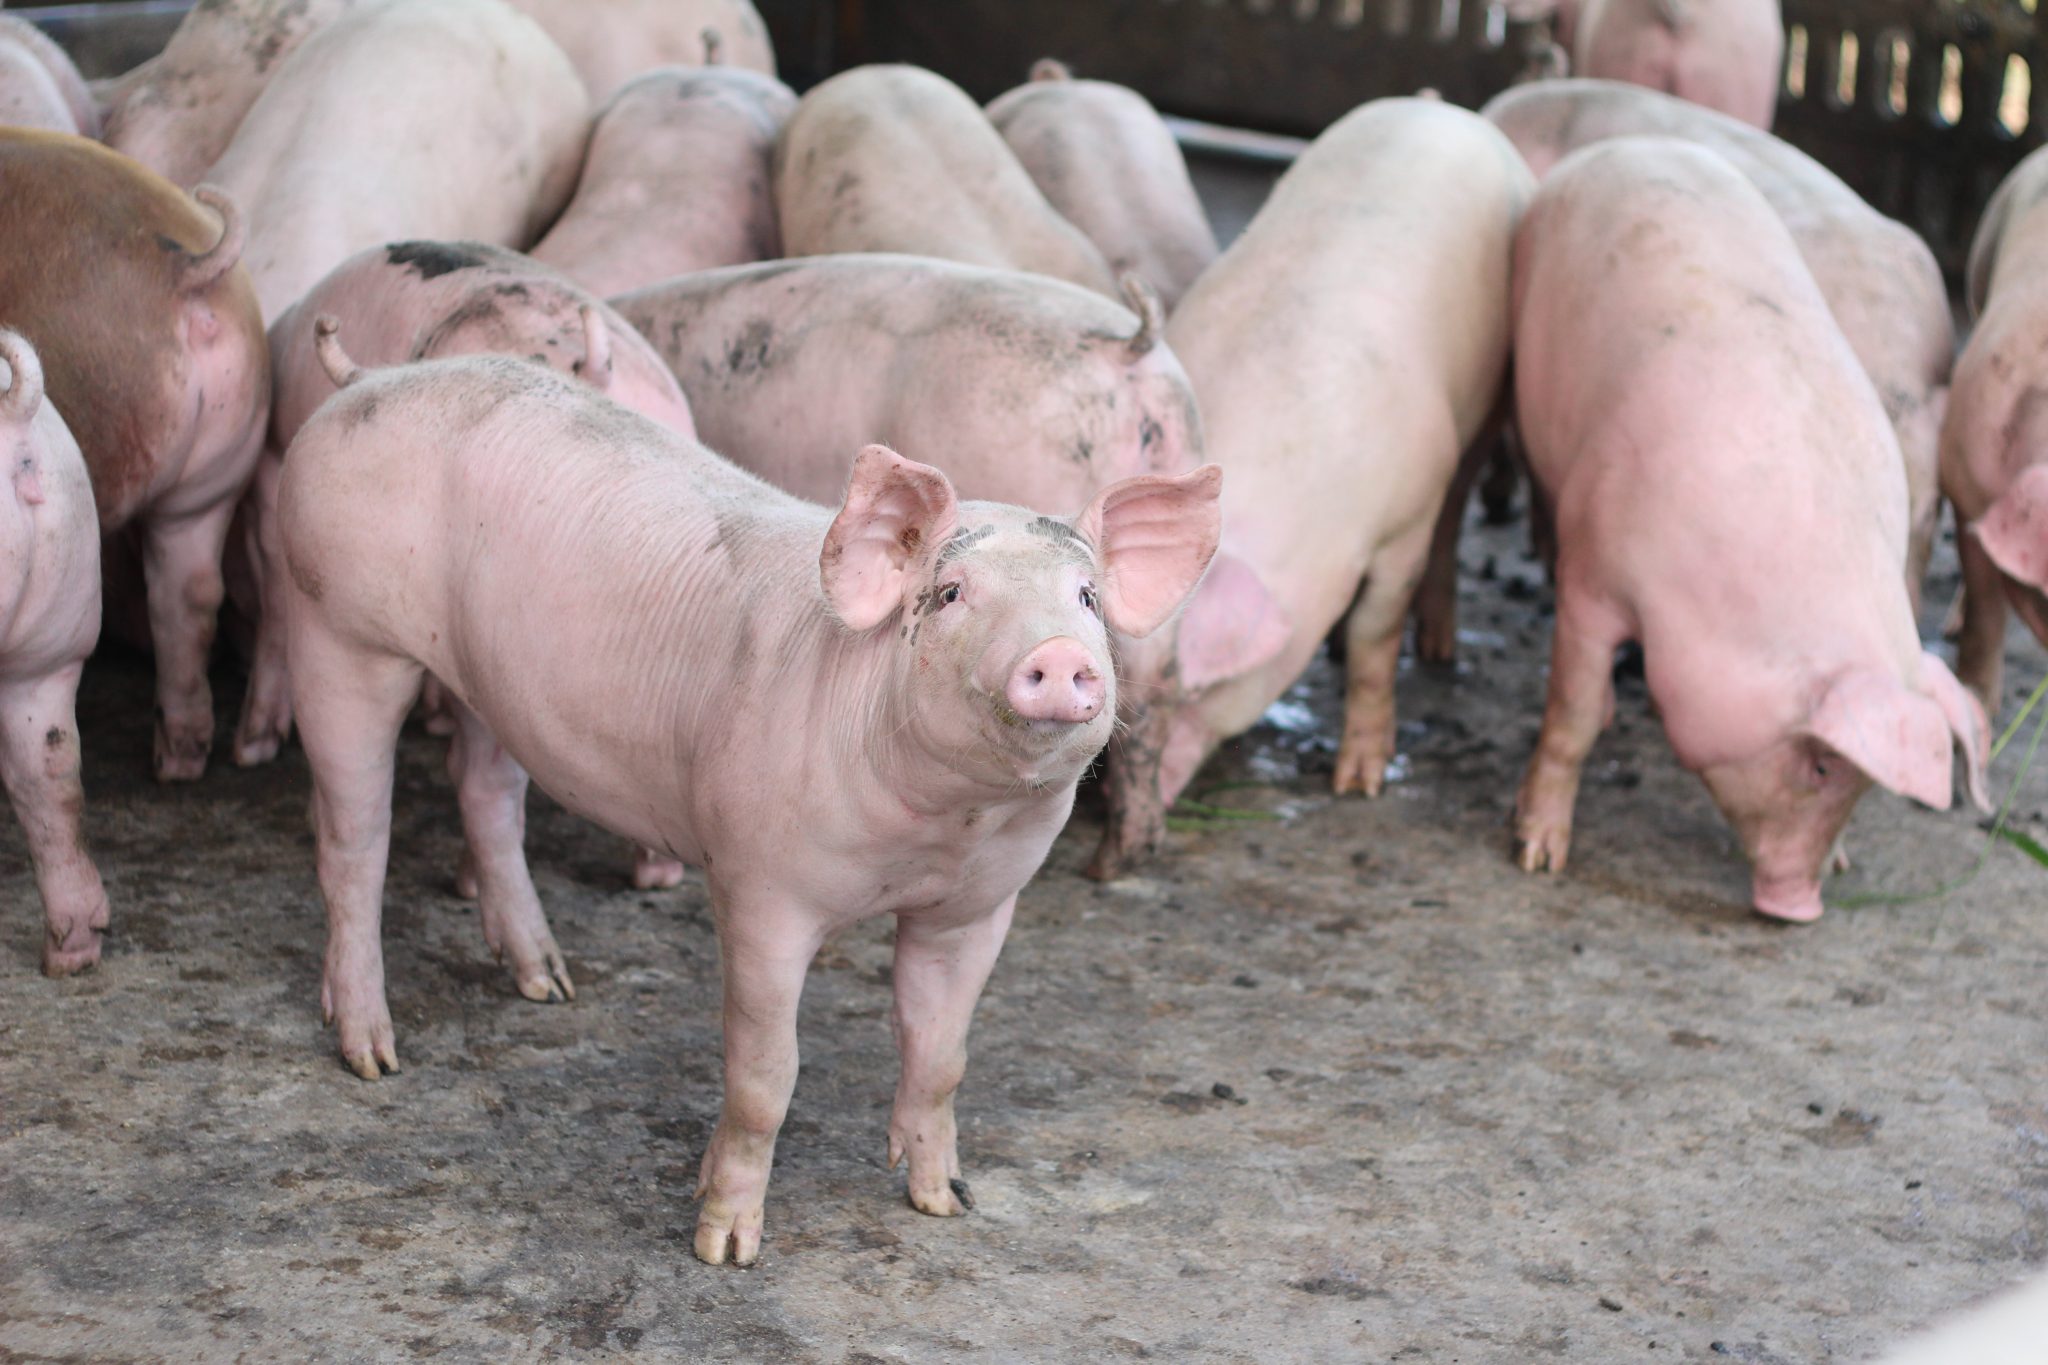 A group of swine (hogs)